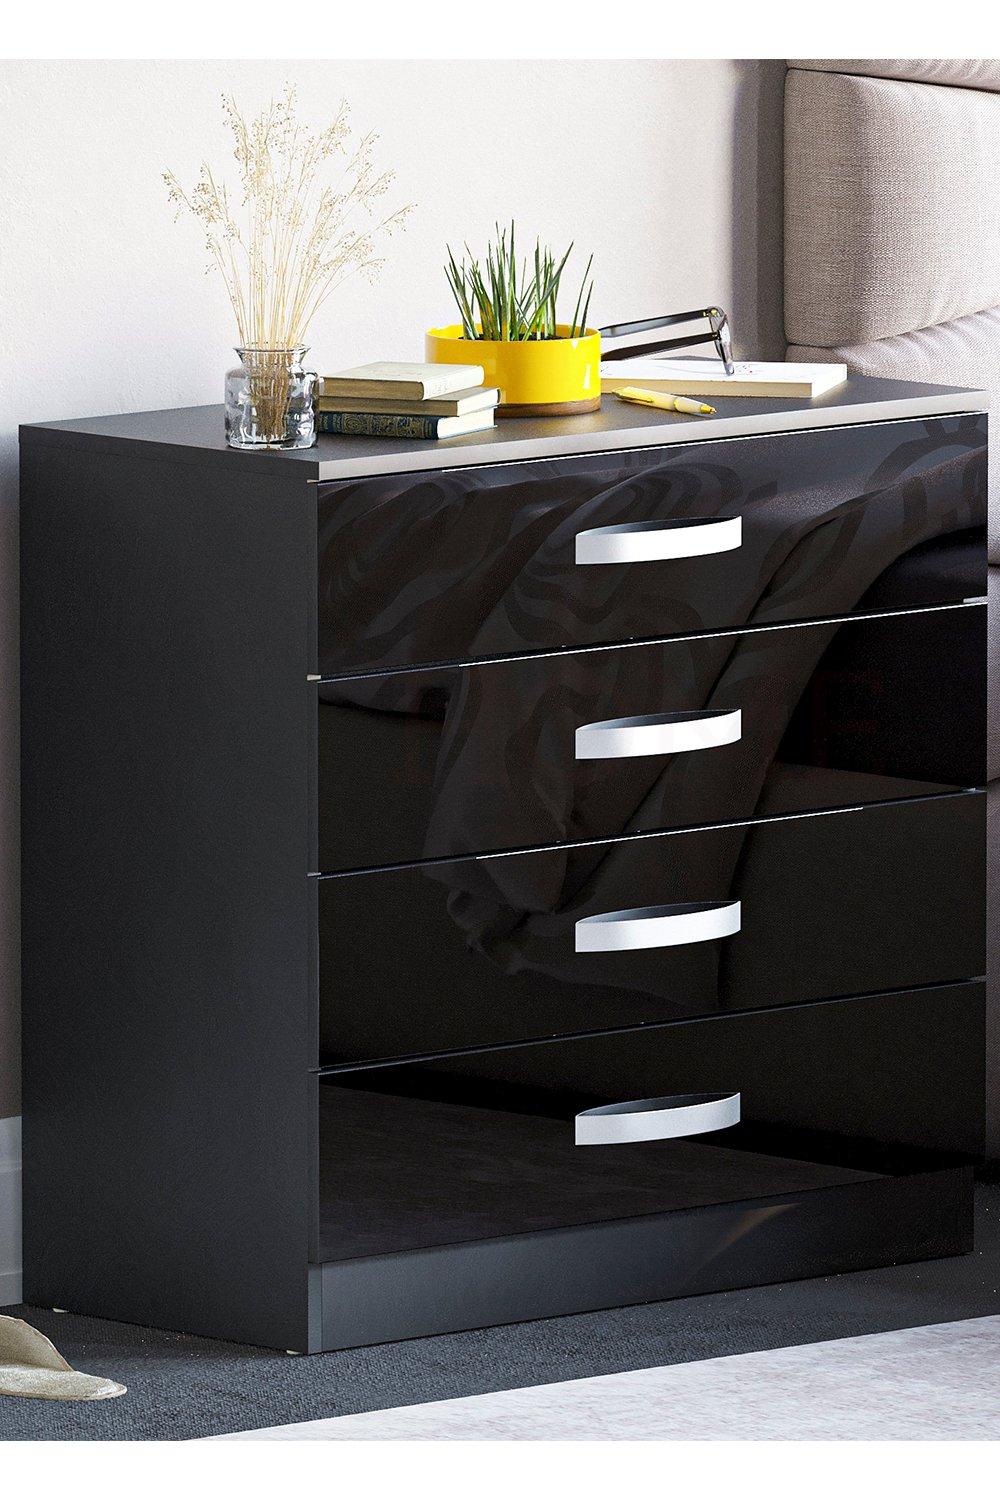 Vida Designs Hulio 4 Drawer Chest of Drawers Storage Bedroom Furniture